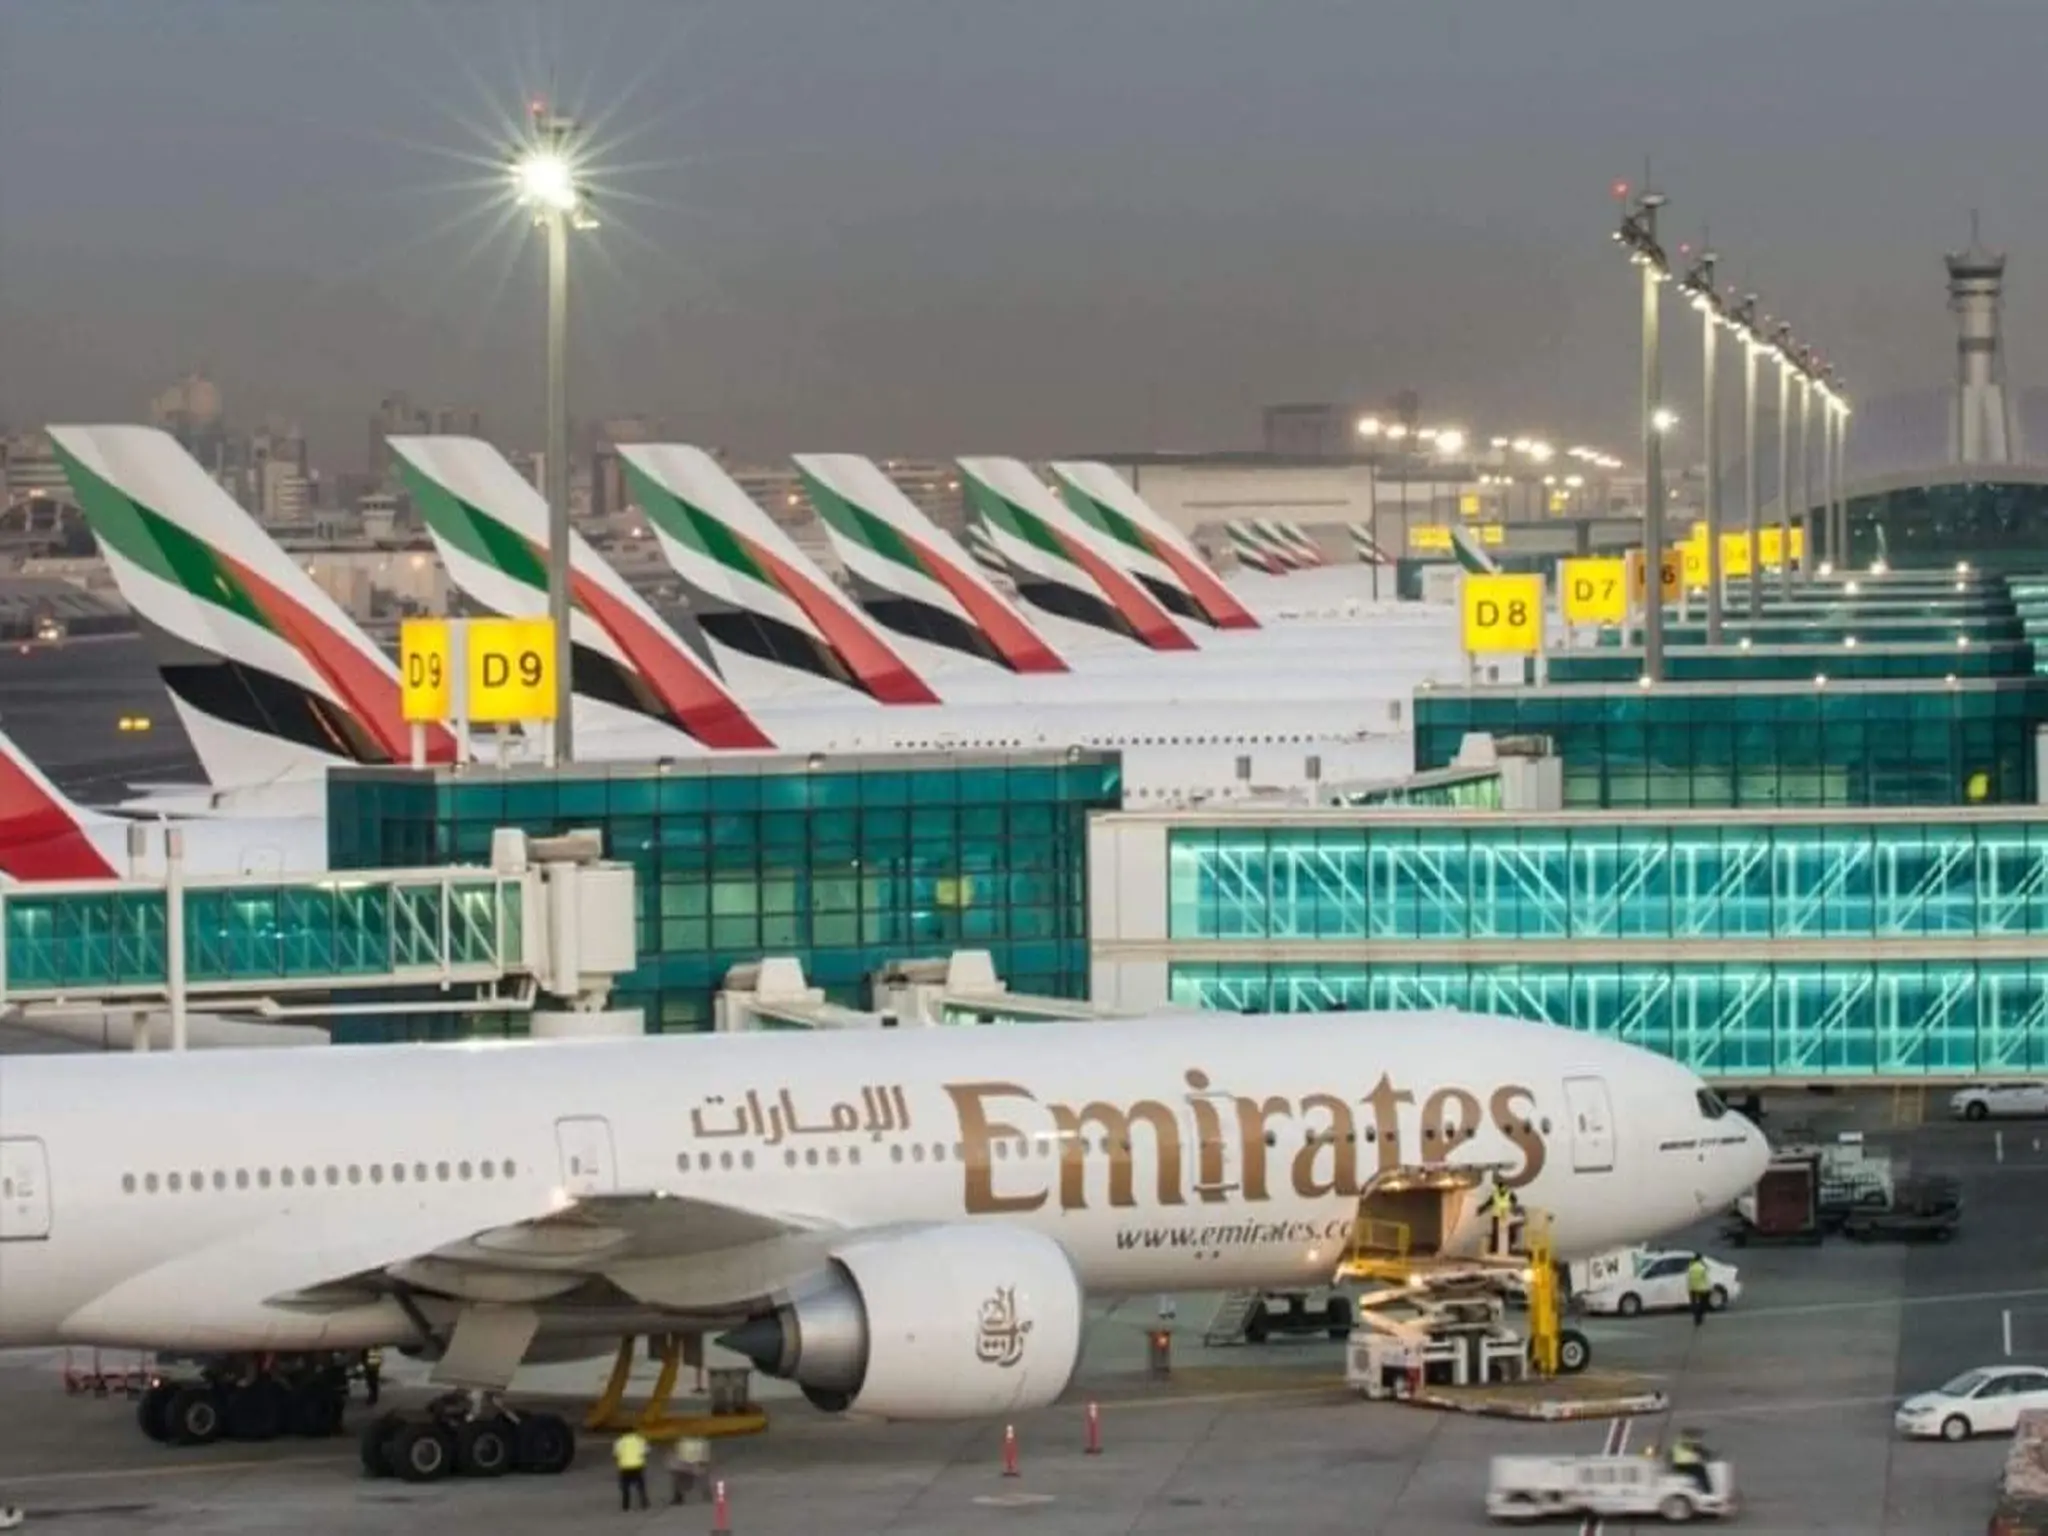 Emirates Airlines announces a previous entry visa